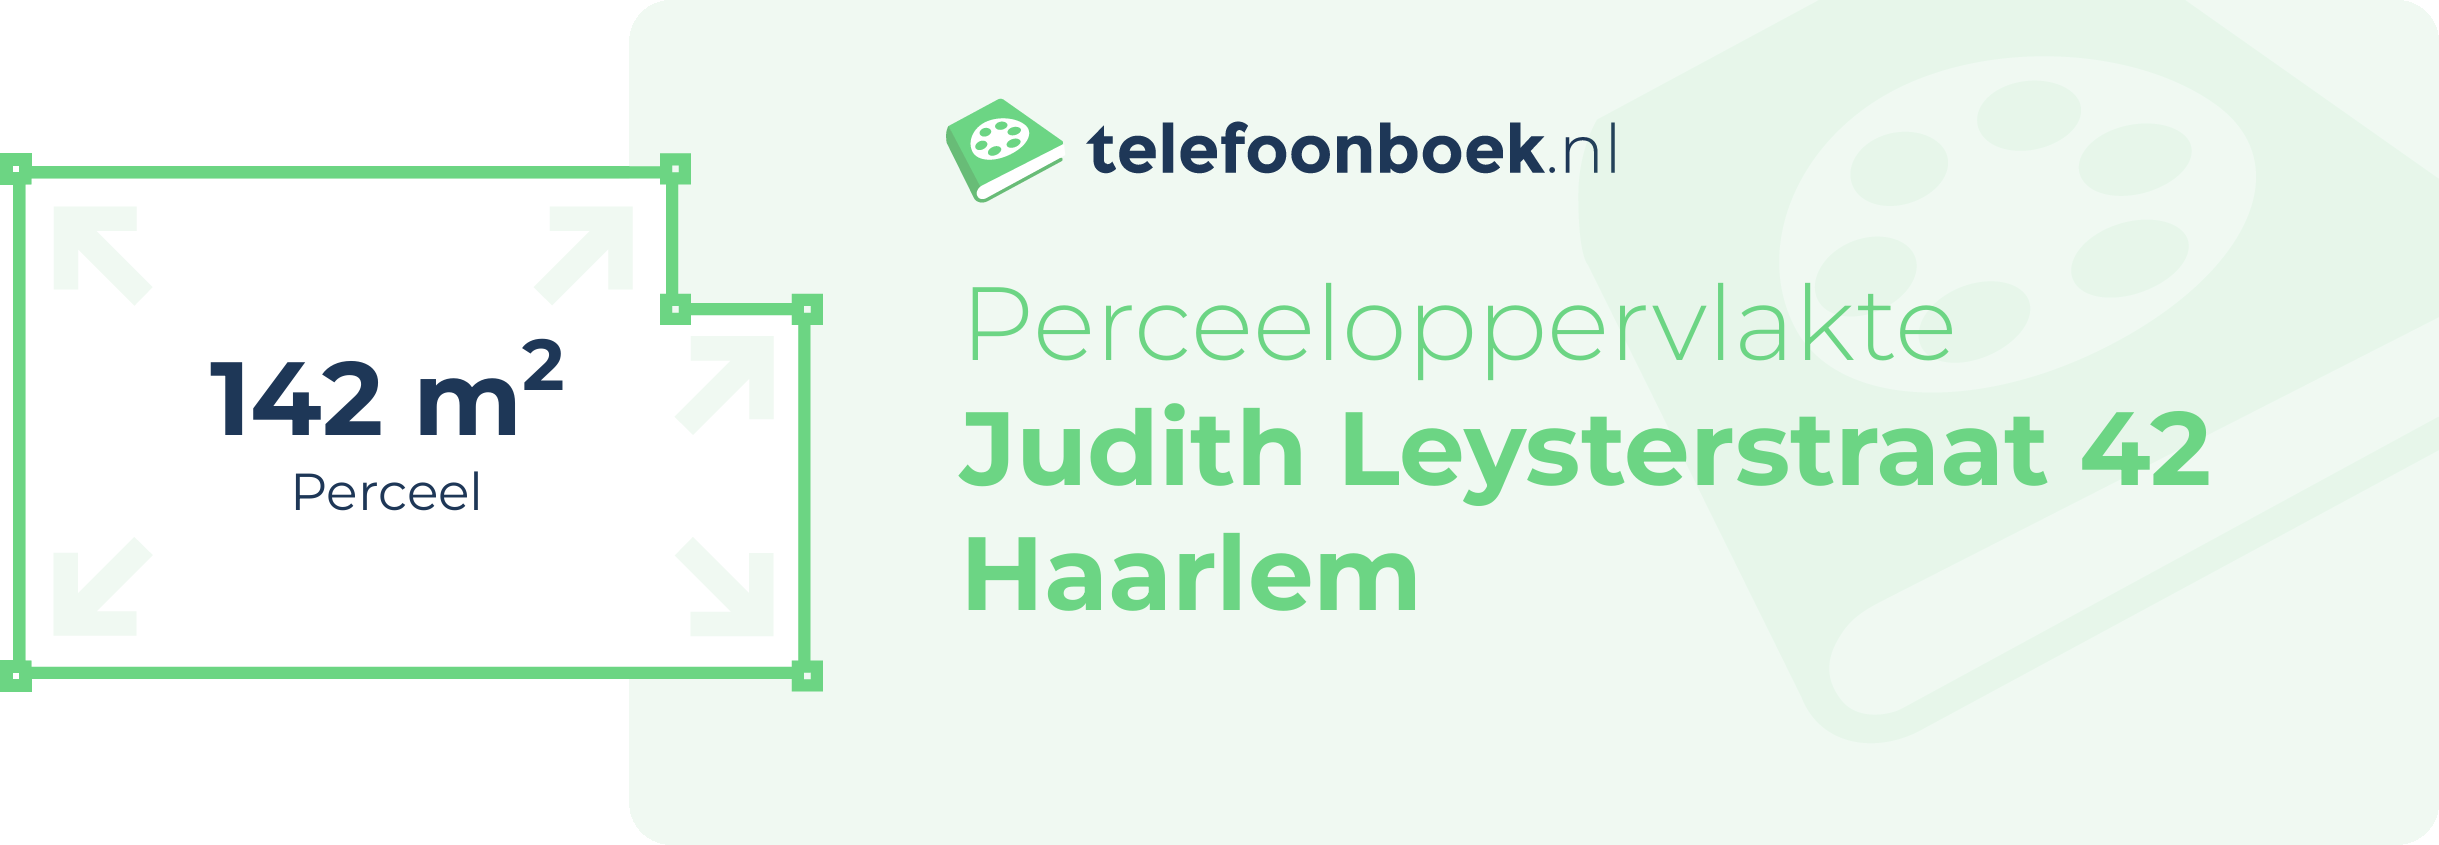 Perceeloppervlakte Judith Leysterstraat 42 Haarlem